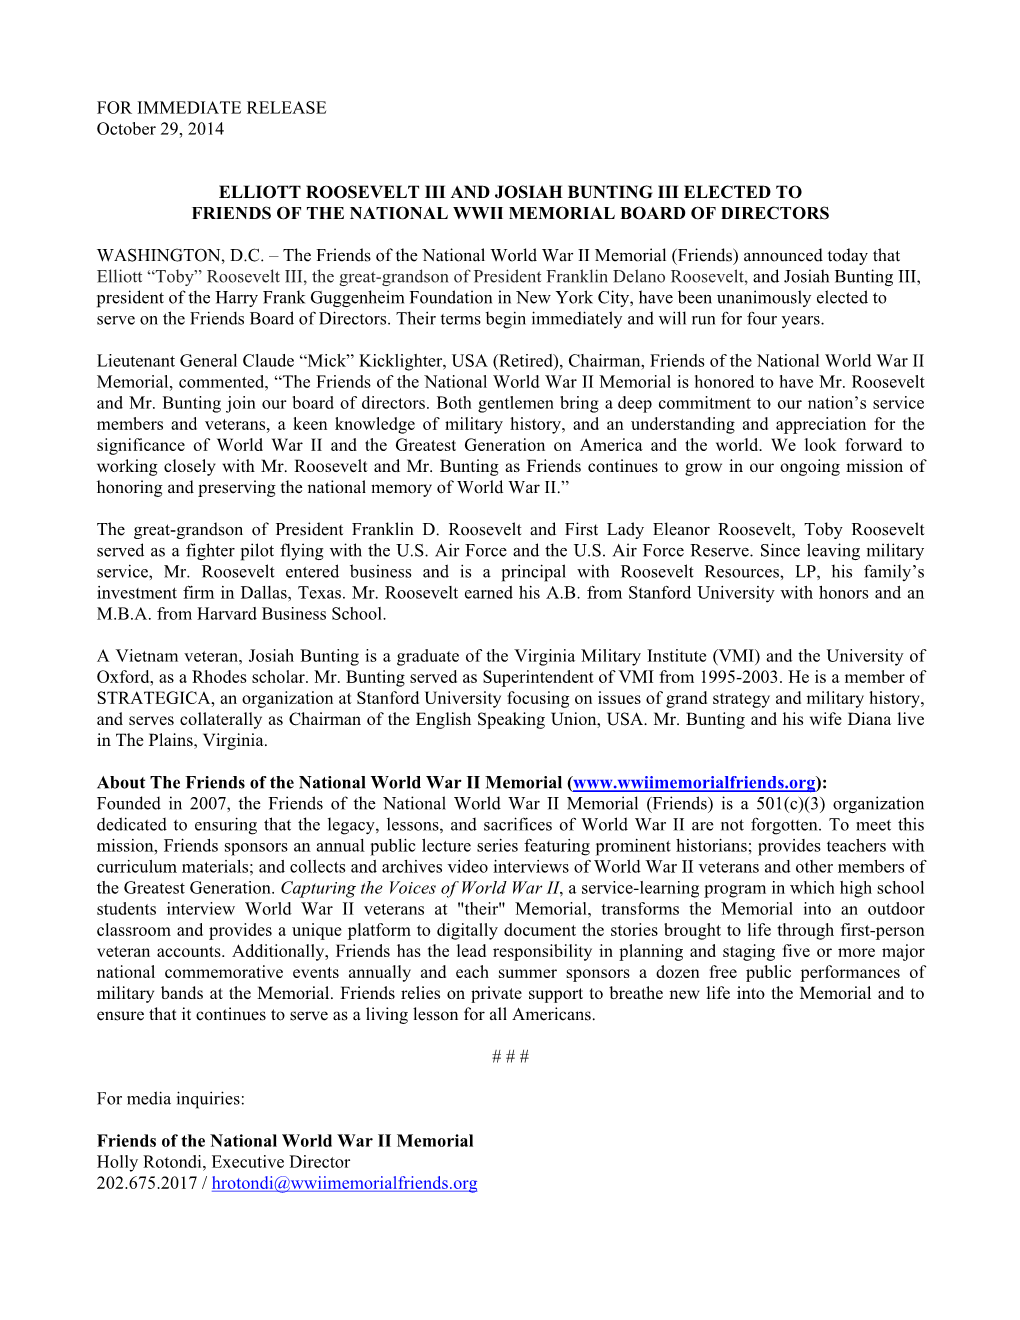 Elliott Roosevelt Iii and Josiah Bunting Iii Elected to Friends of the National Wwii Memorial Board of Directors